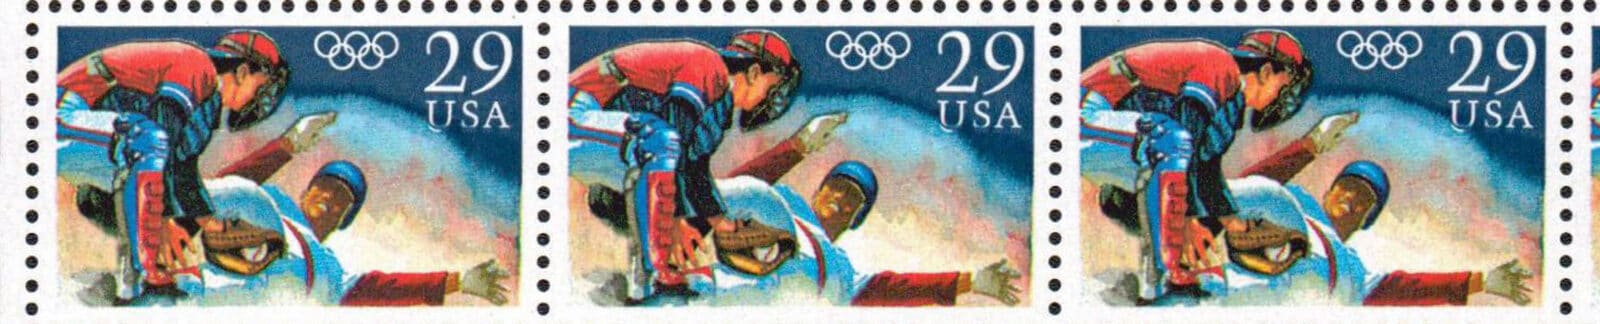 Baseball, 1992 Olympic Summer Games, U.S. Postage Stamp header